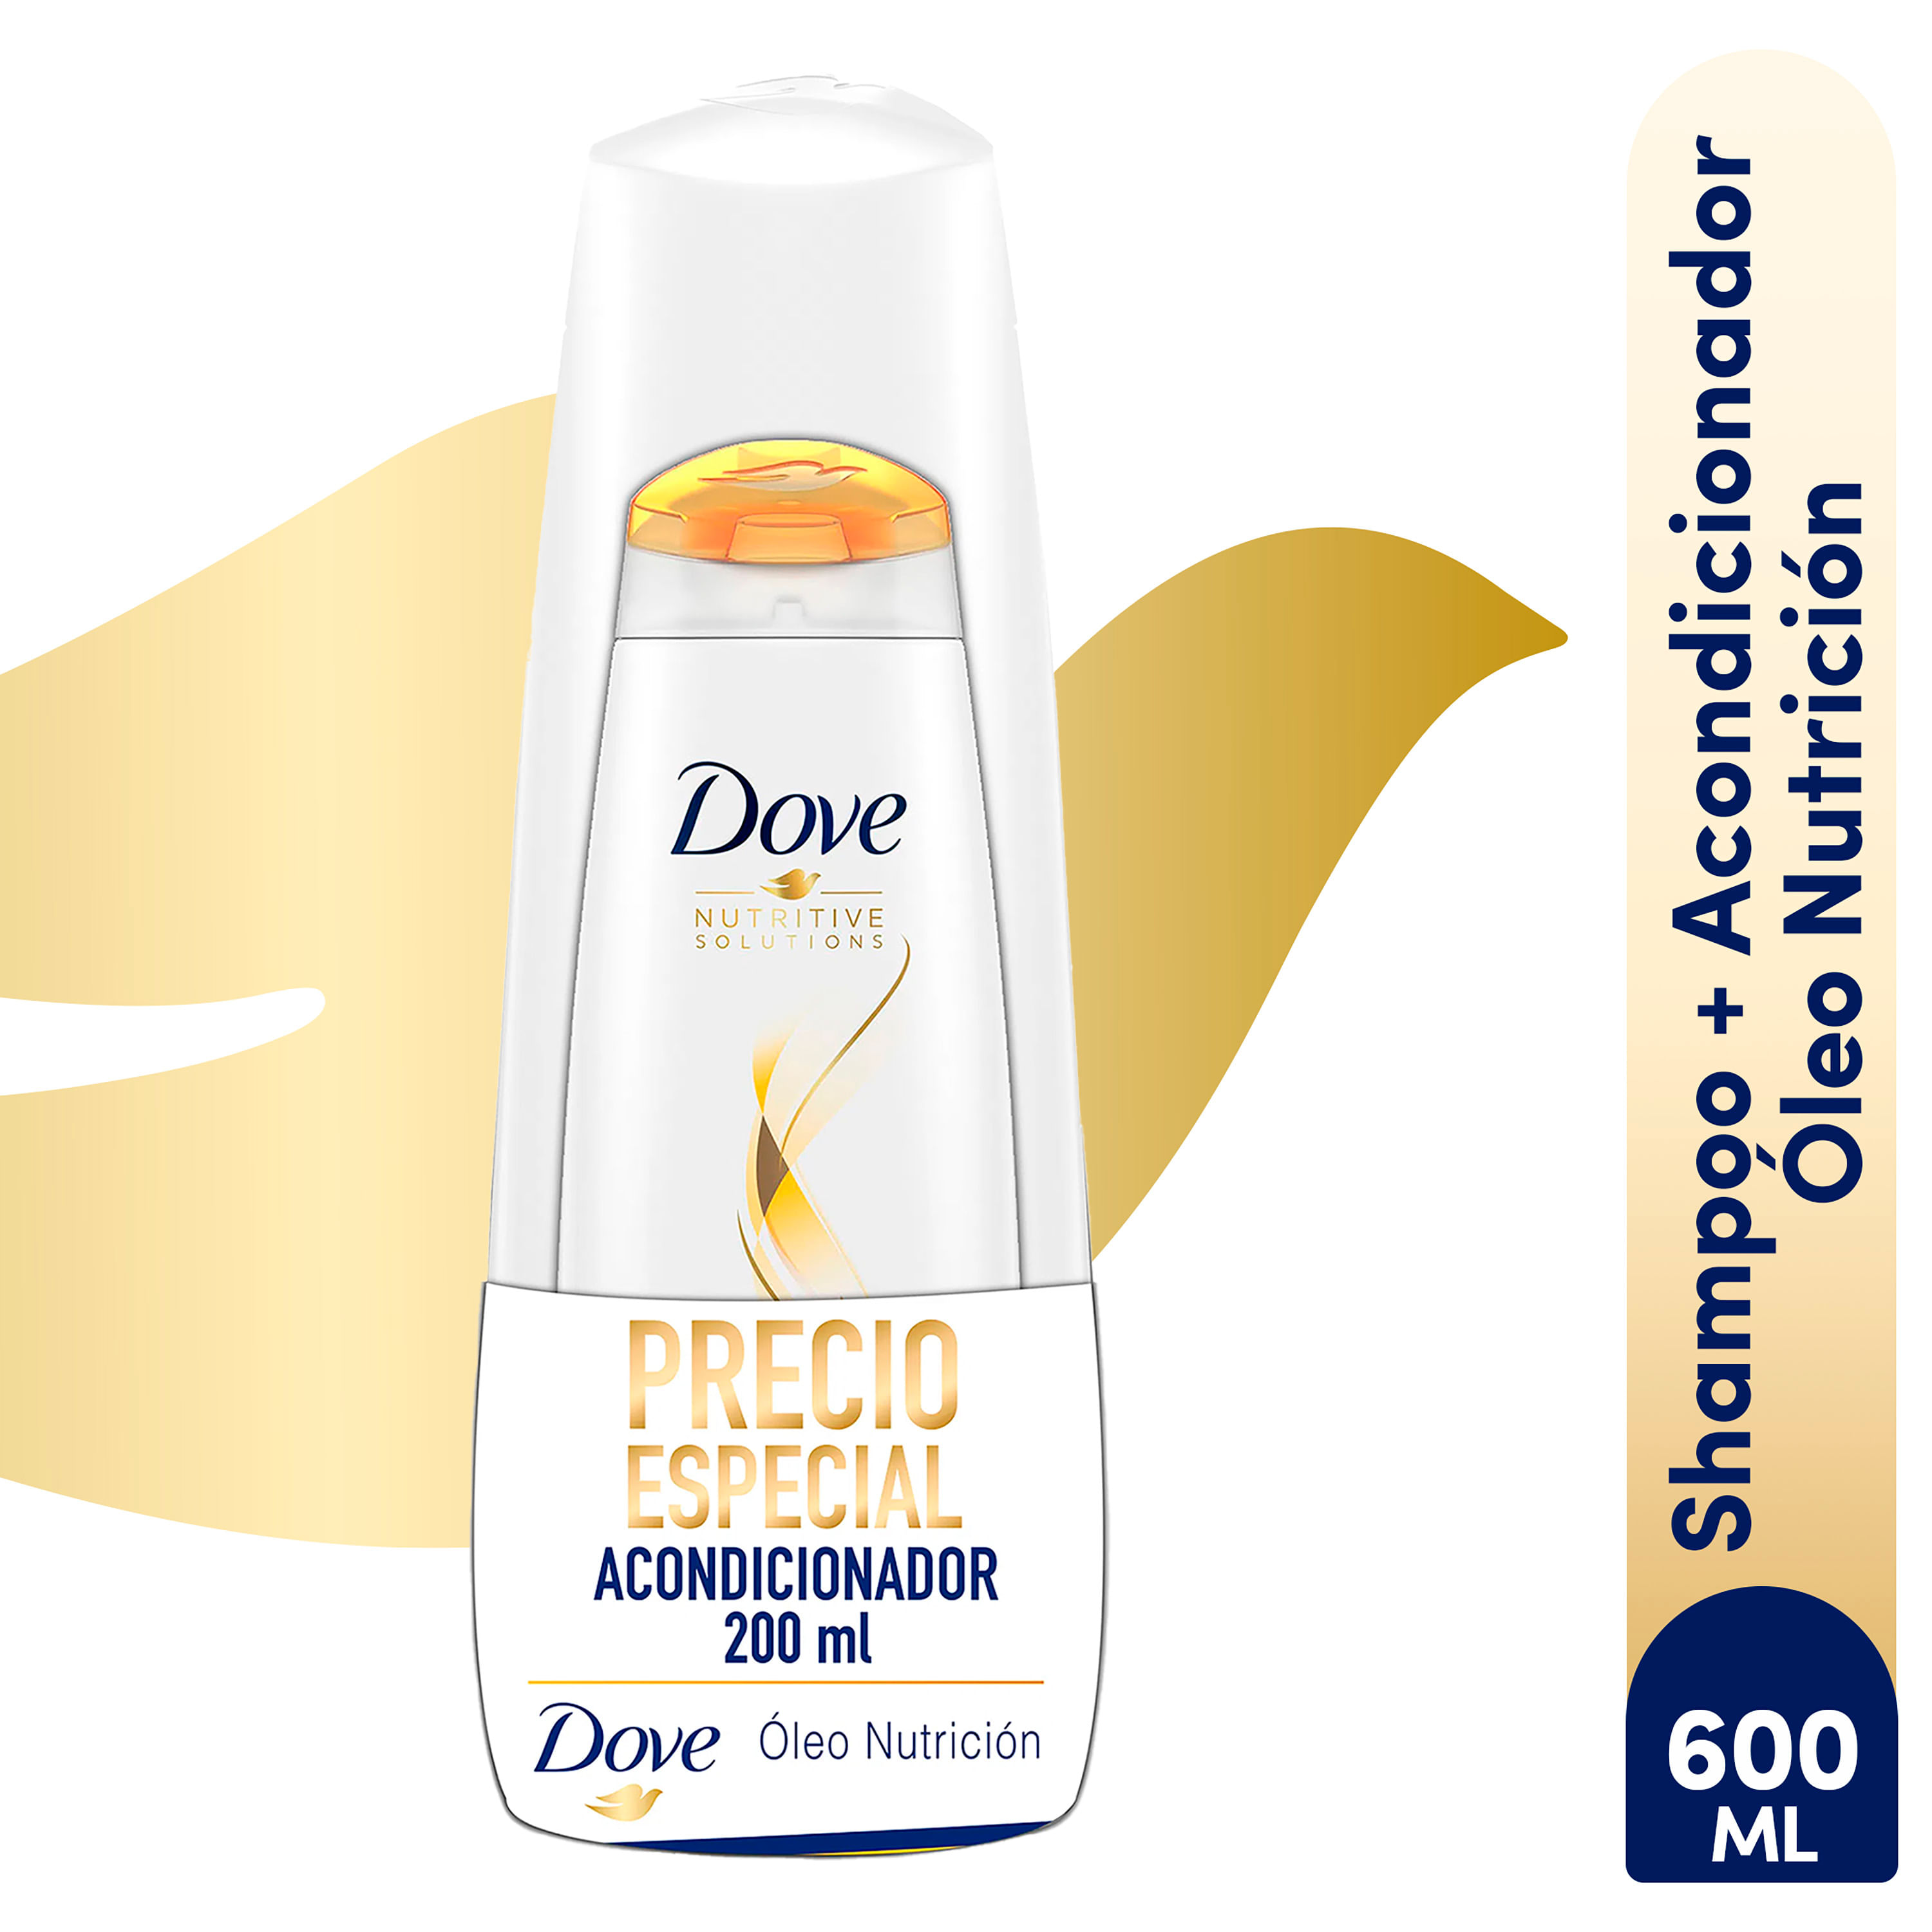 Shampoo-Dove-Oleo-Nutricion-400ml-Acondicionador-200ml-1-33065